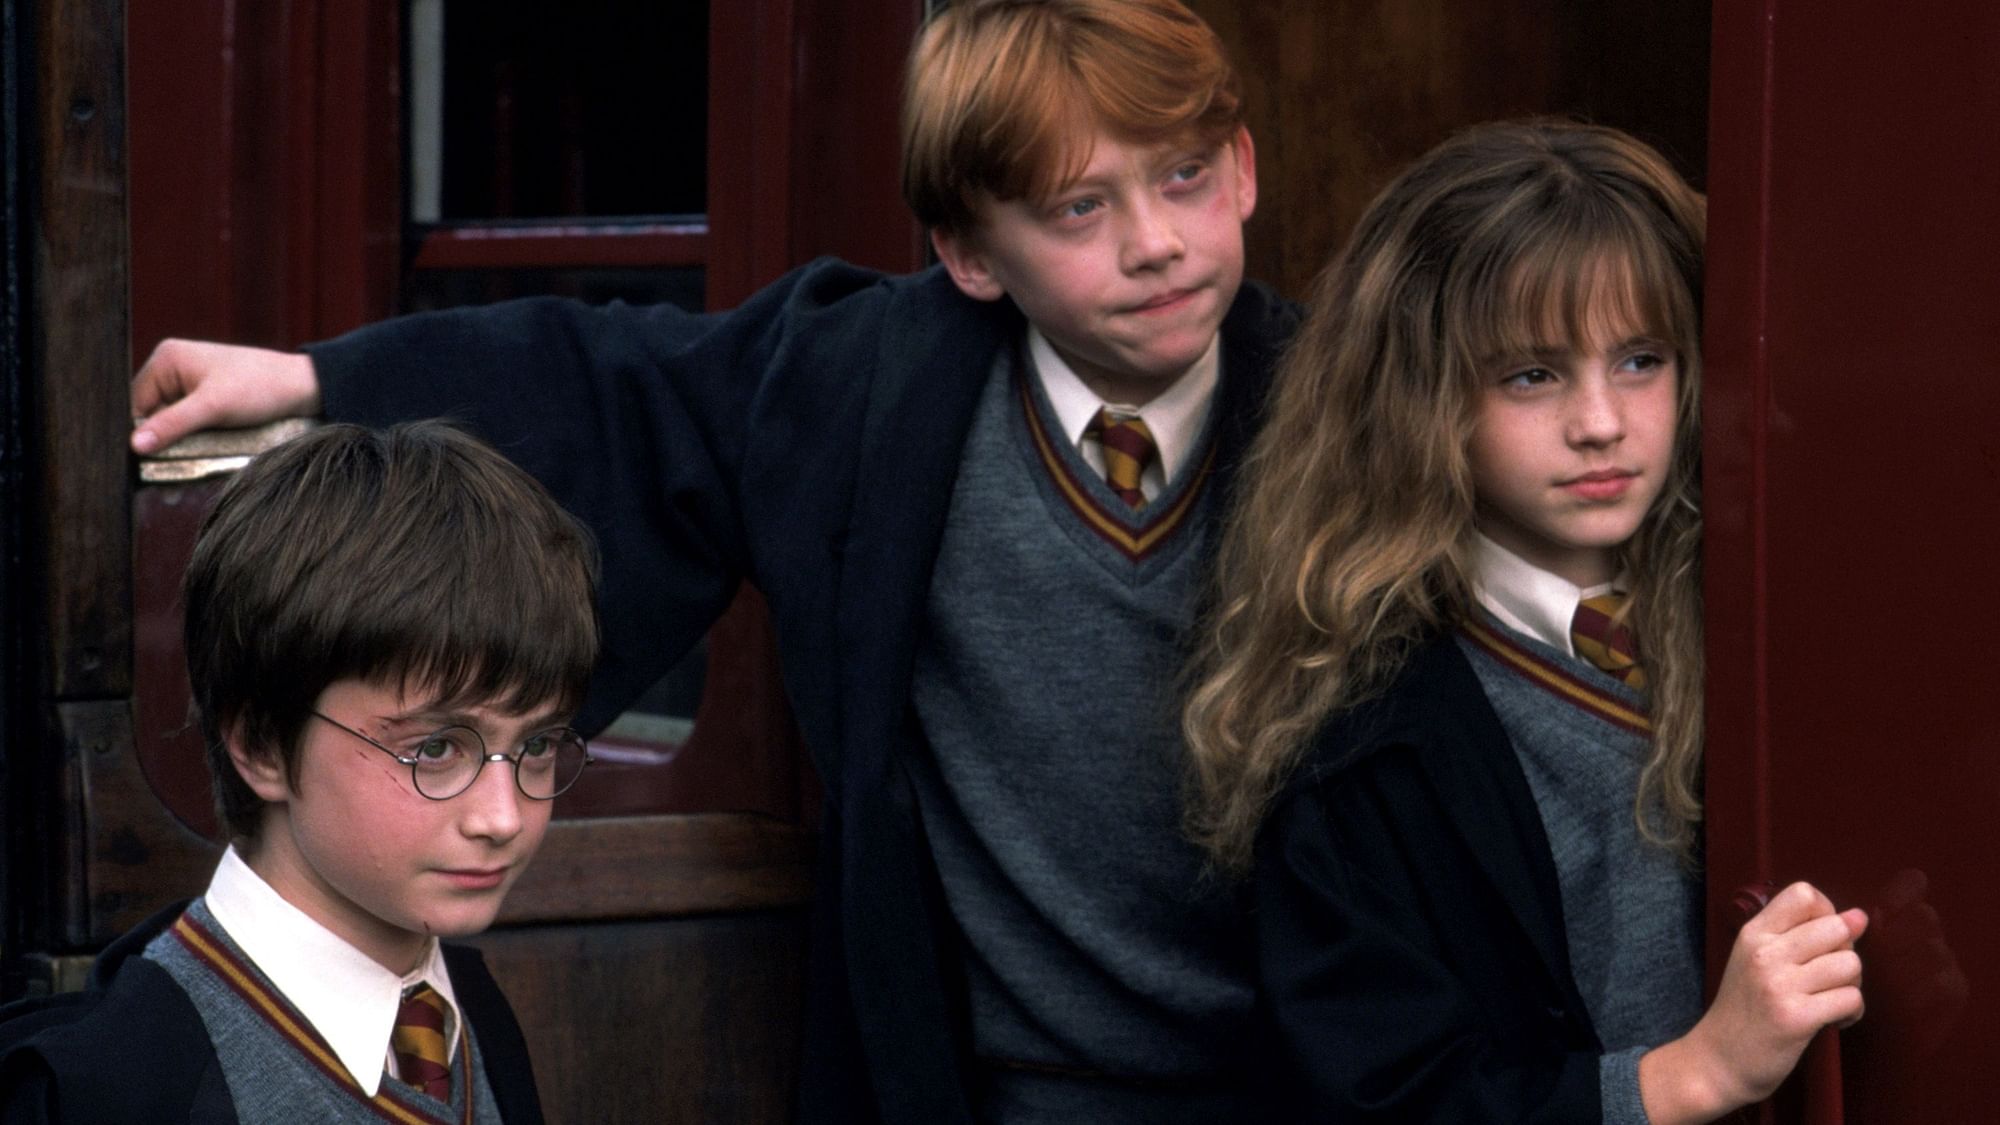 <div class="paragraphs"><p>Daniel Radcliffe, Rupert Grint, and Emma Watson in a still from<em> Harry Potter.</em></p></div>